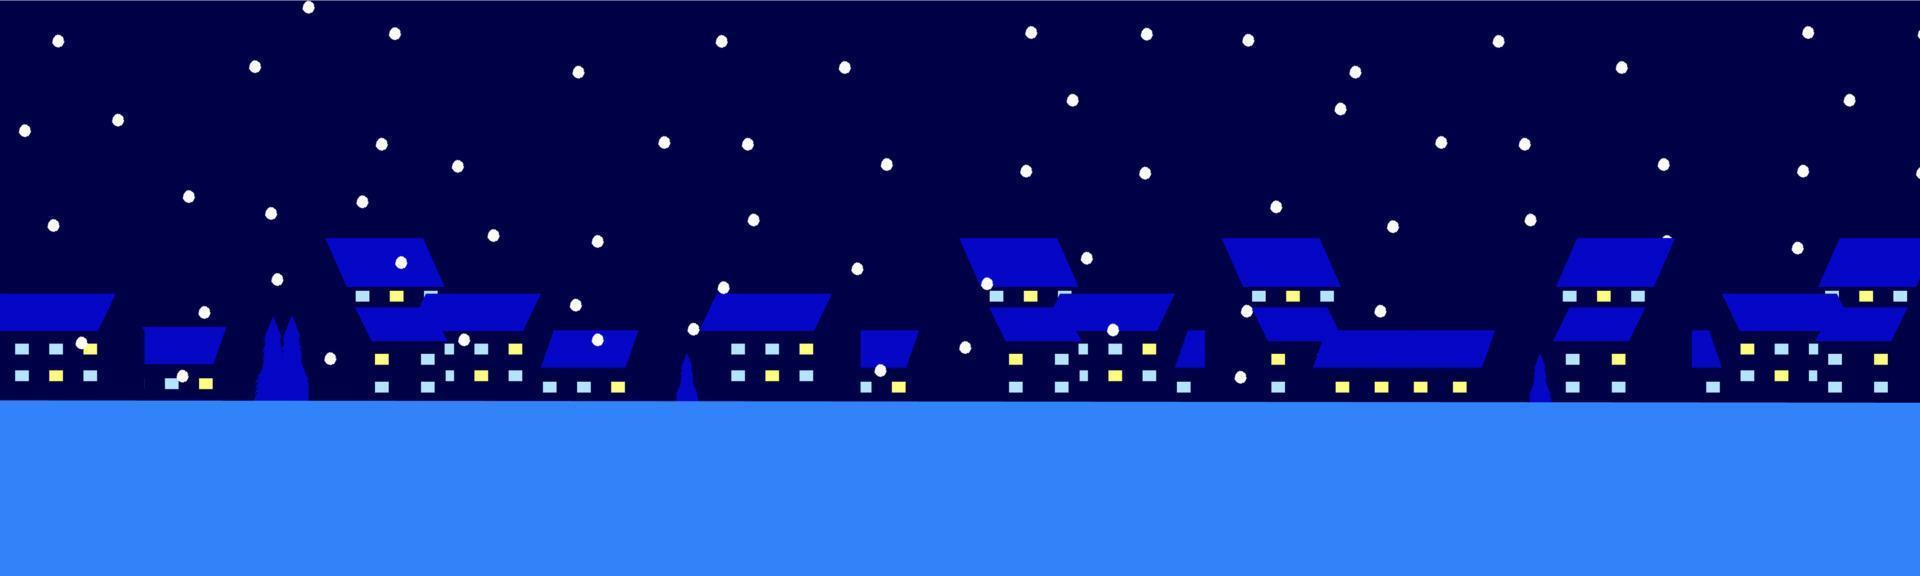 vector illustratie van abstract winter stad- landschap. stad- nacht achtergrond, winter nacht regen sneeuw. stad- nacht winter